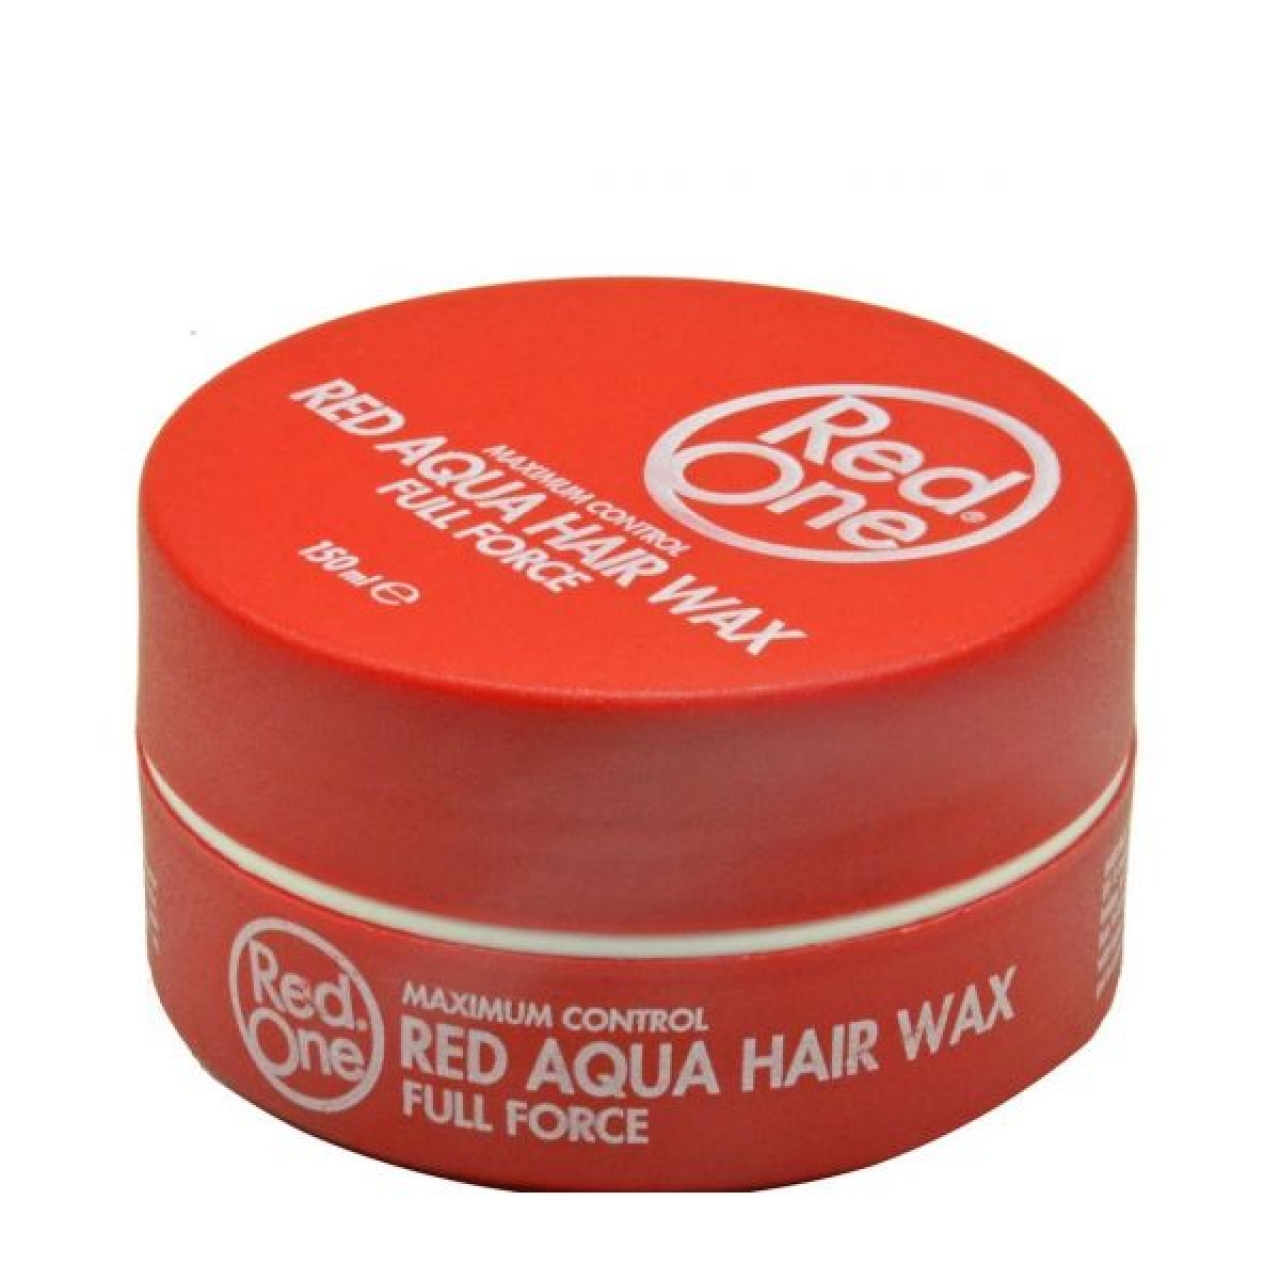 Redone Aqua Wax. Red Aqua Hair Wax Full FOrce